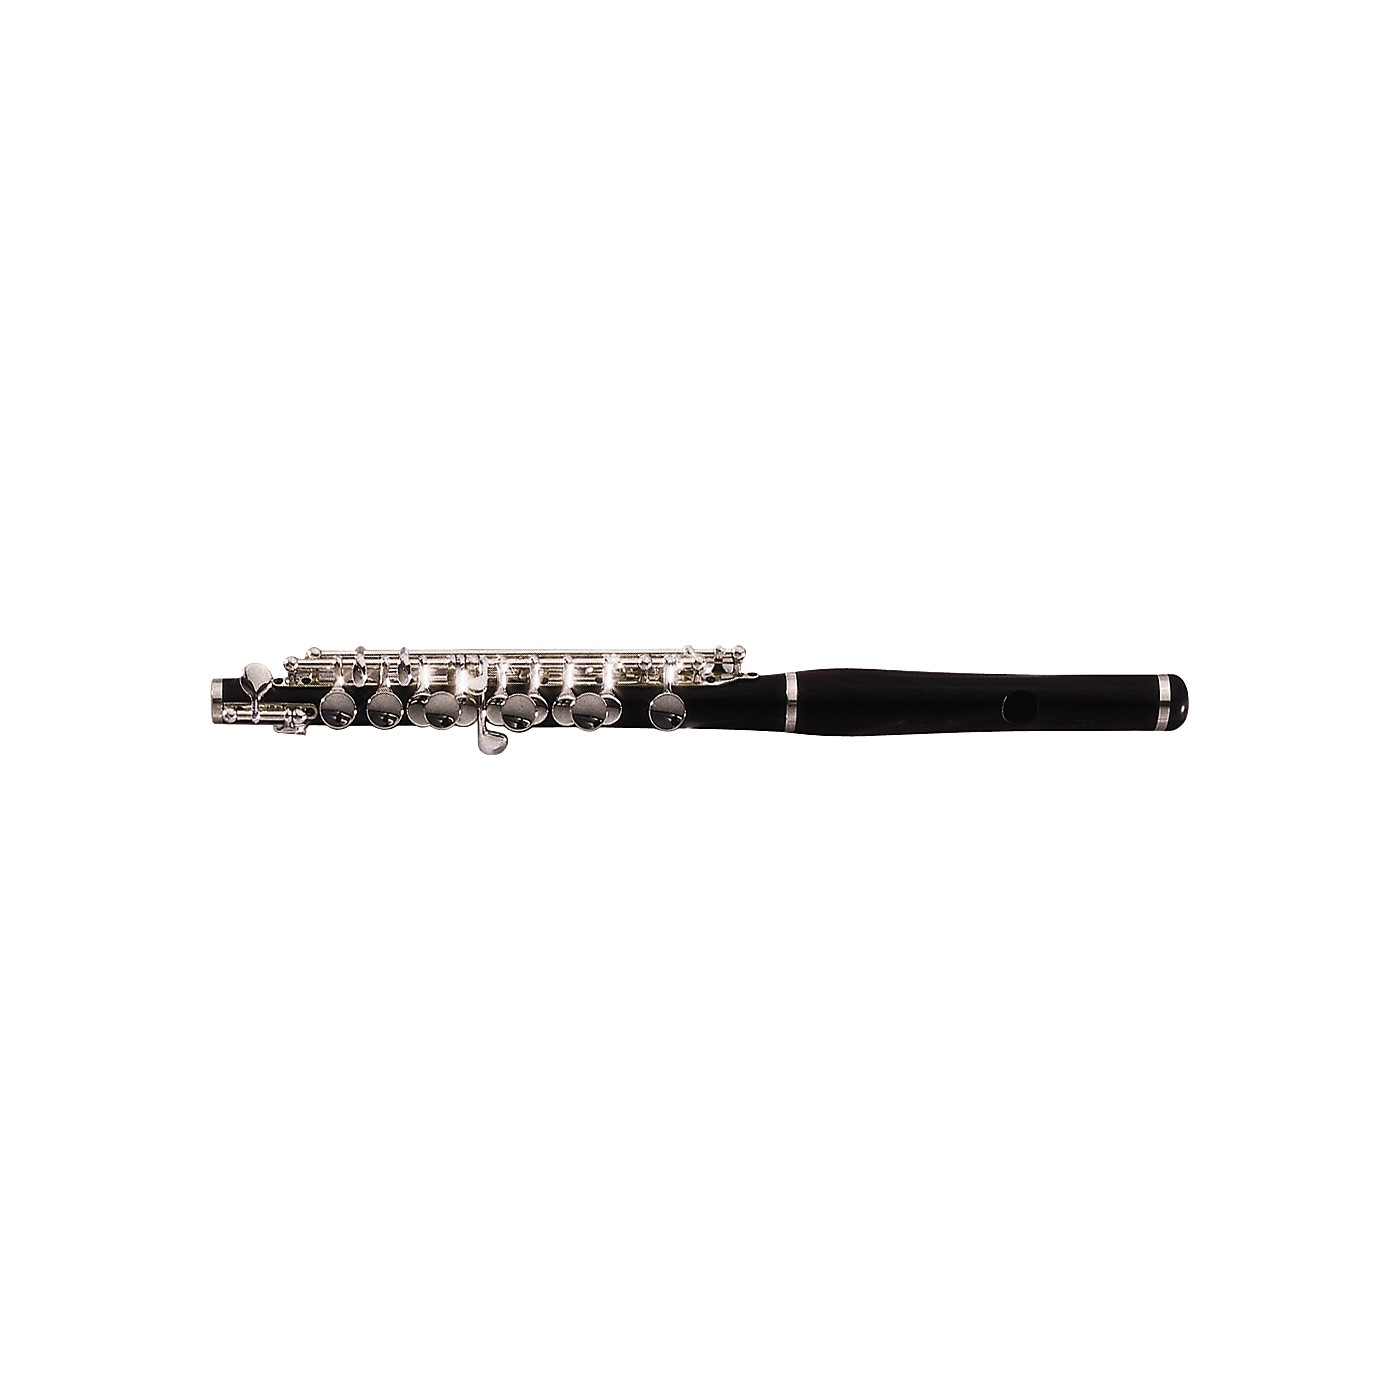 emerson flute reviews